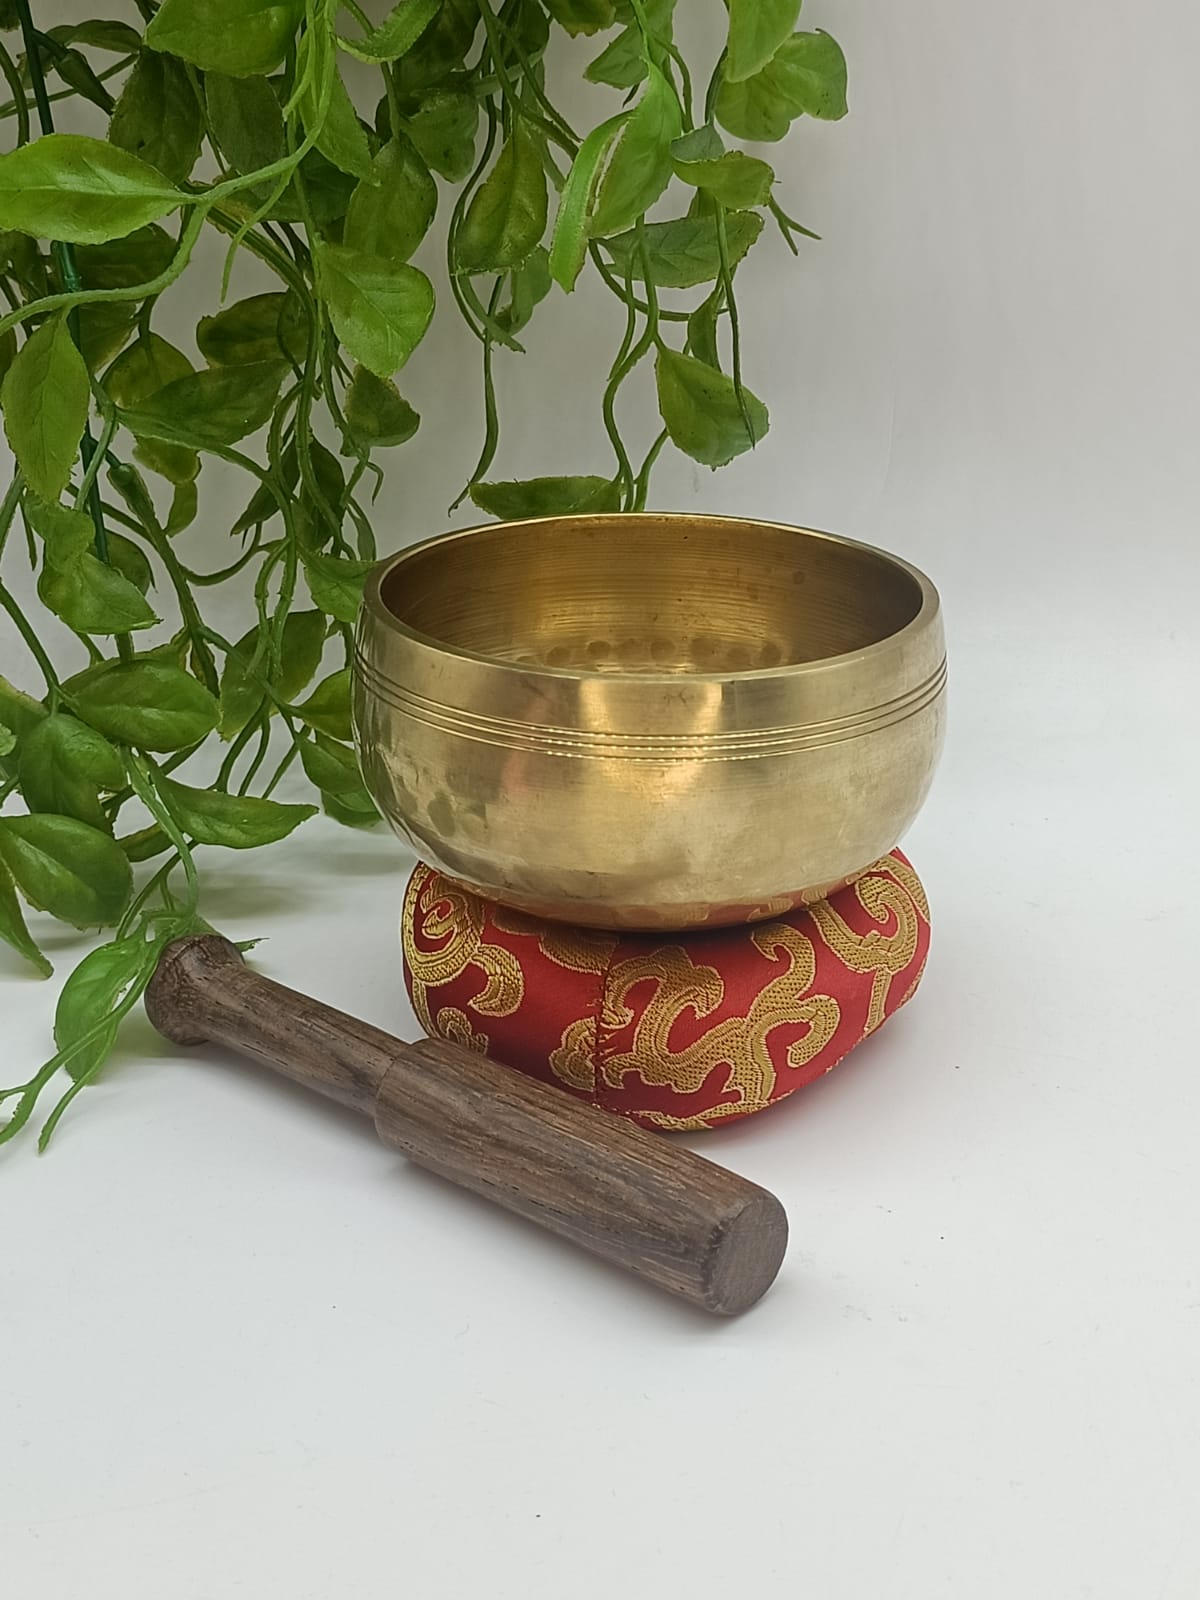 Tibetan Sound Healing Bowl 3.5 Inch A Note - Third Eye

